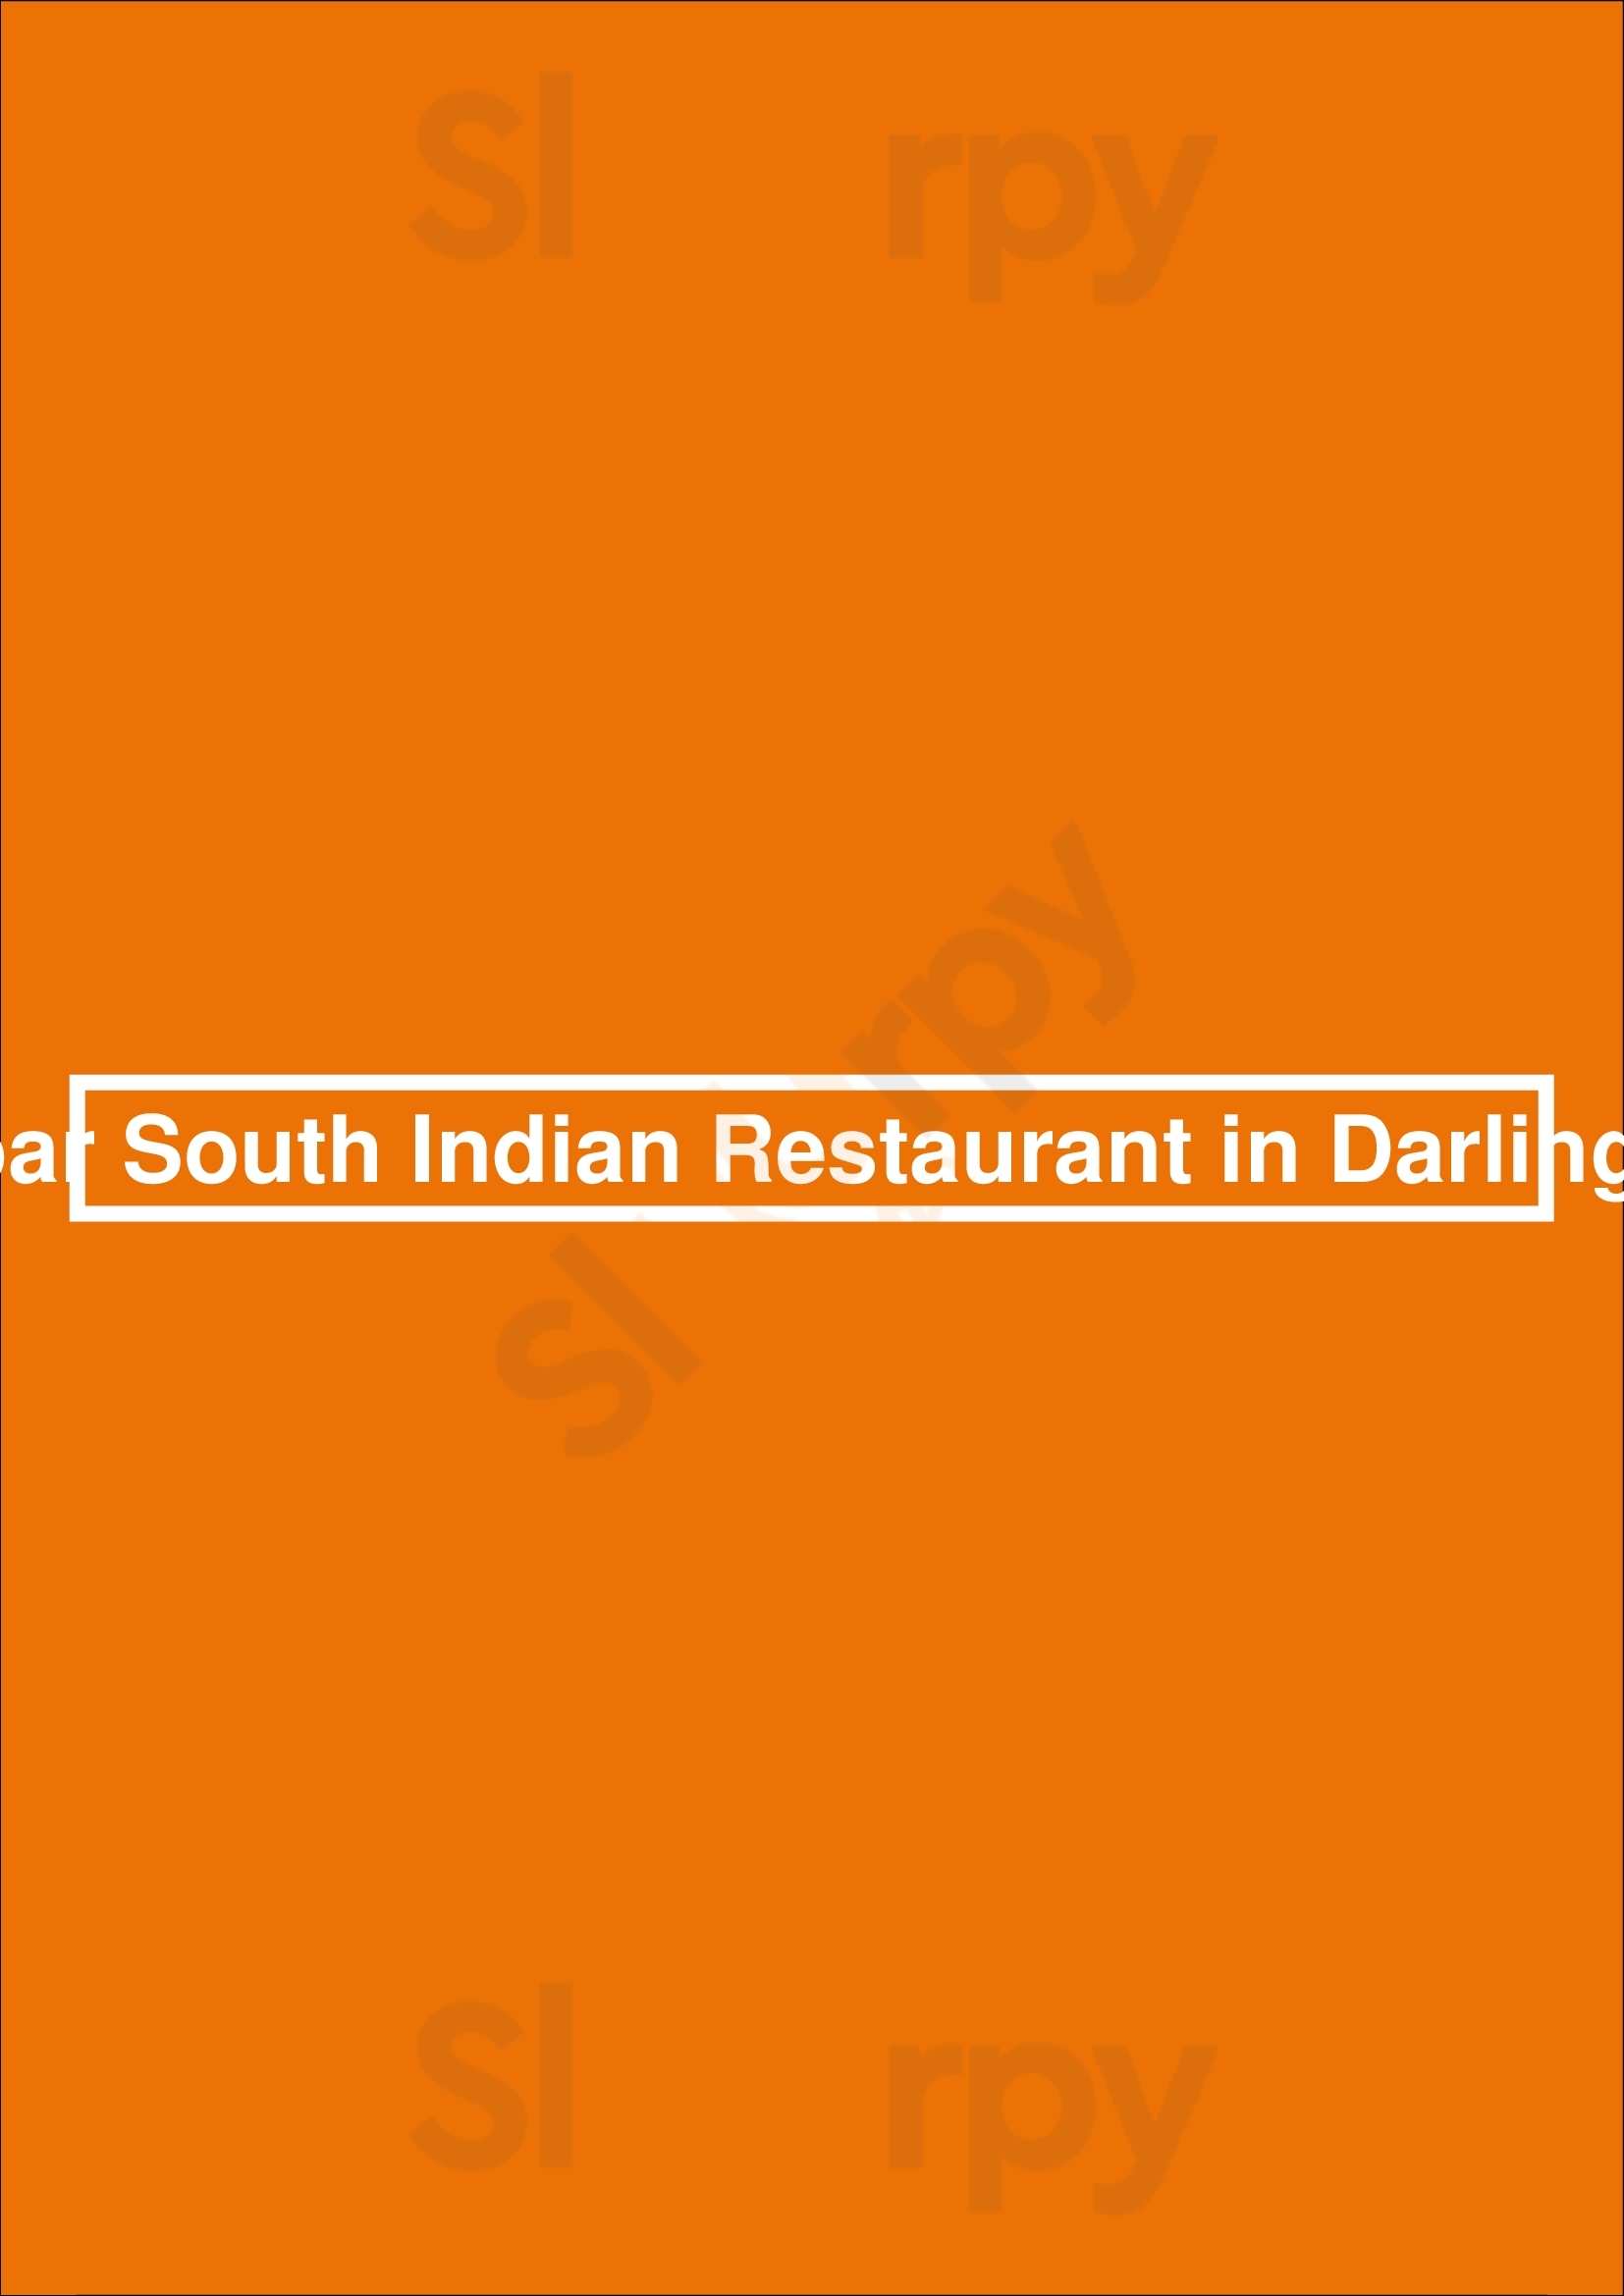 Malabar South Indian Restaurant In Darlinghurst Sydney Menu - 1